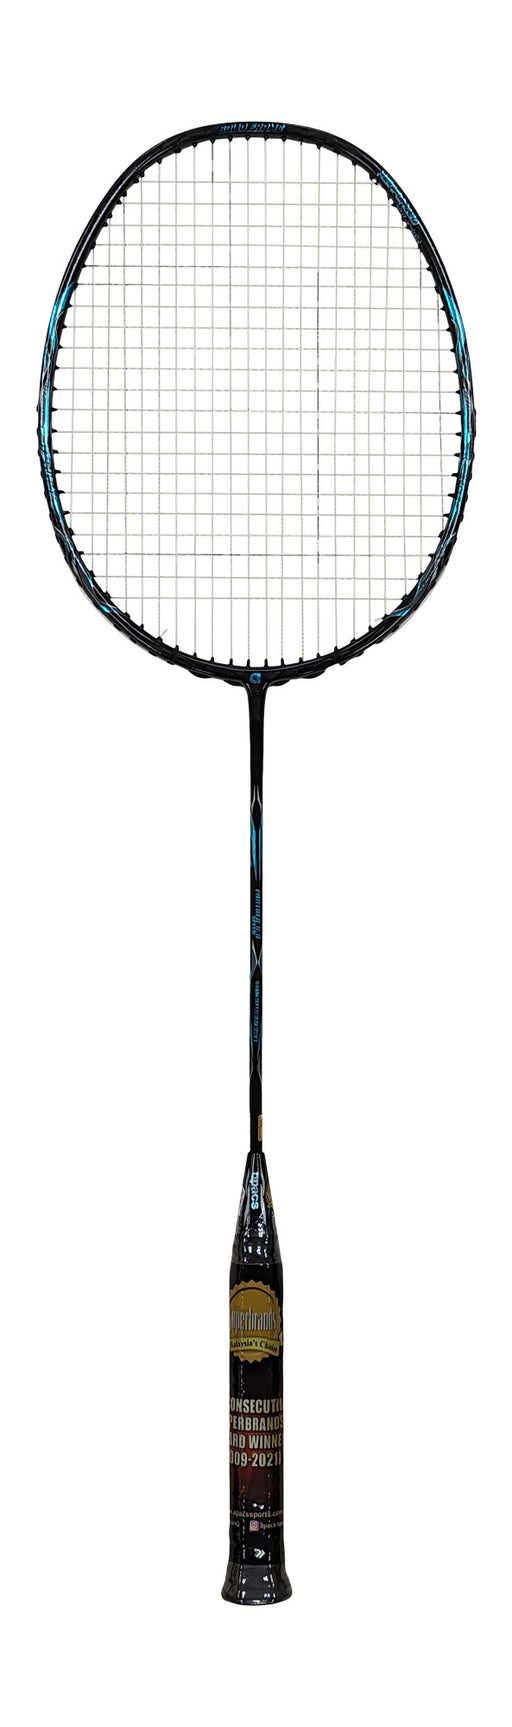 Apacs Fantala 6.0 Speed Badminton Racket (Pre-Strung) on sale at Badminton Warehouse